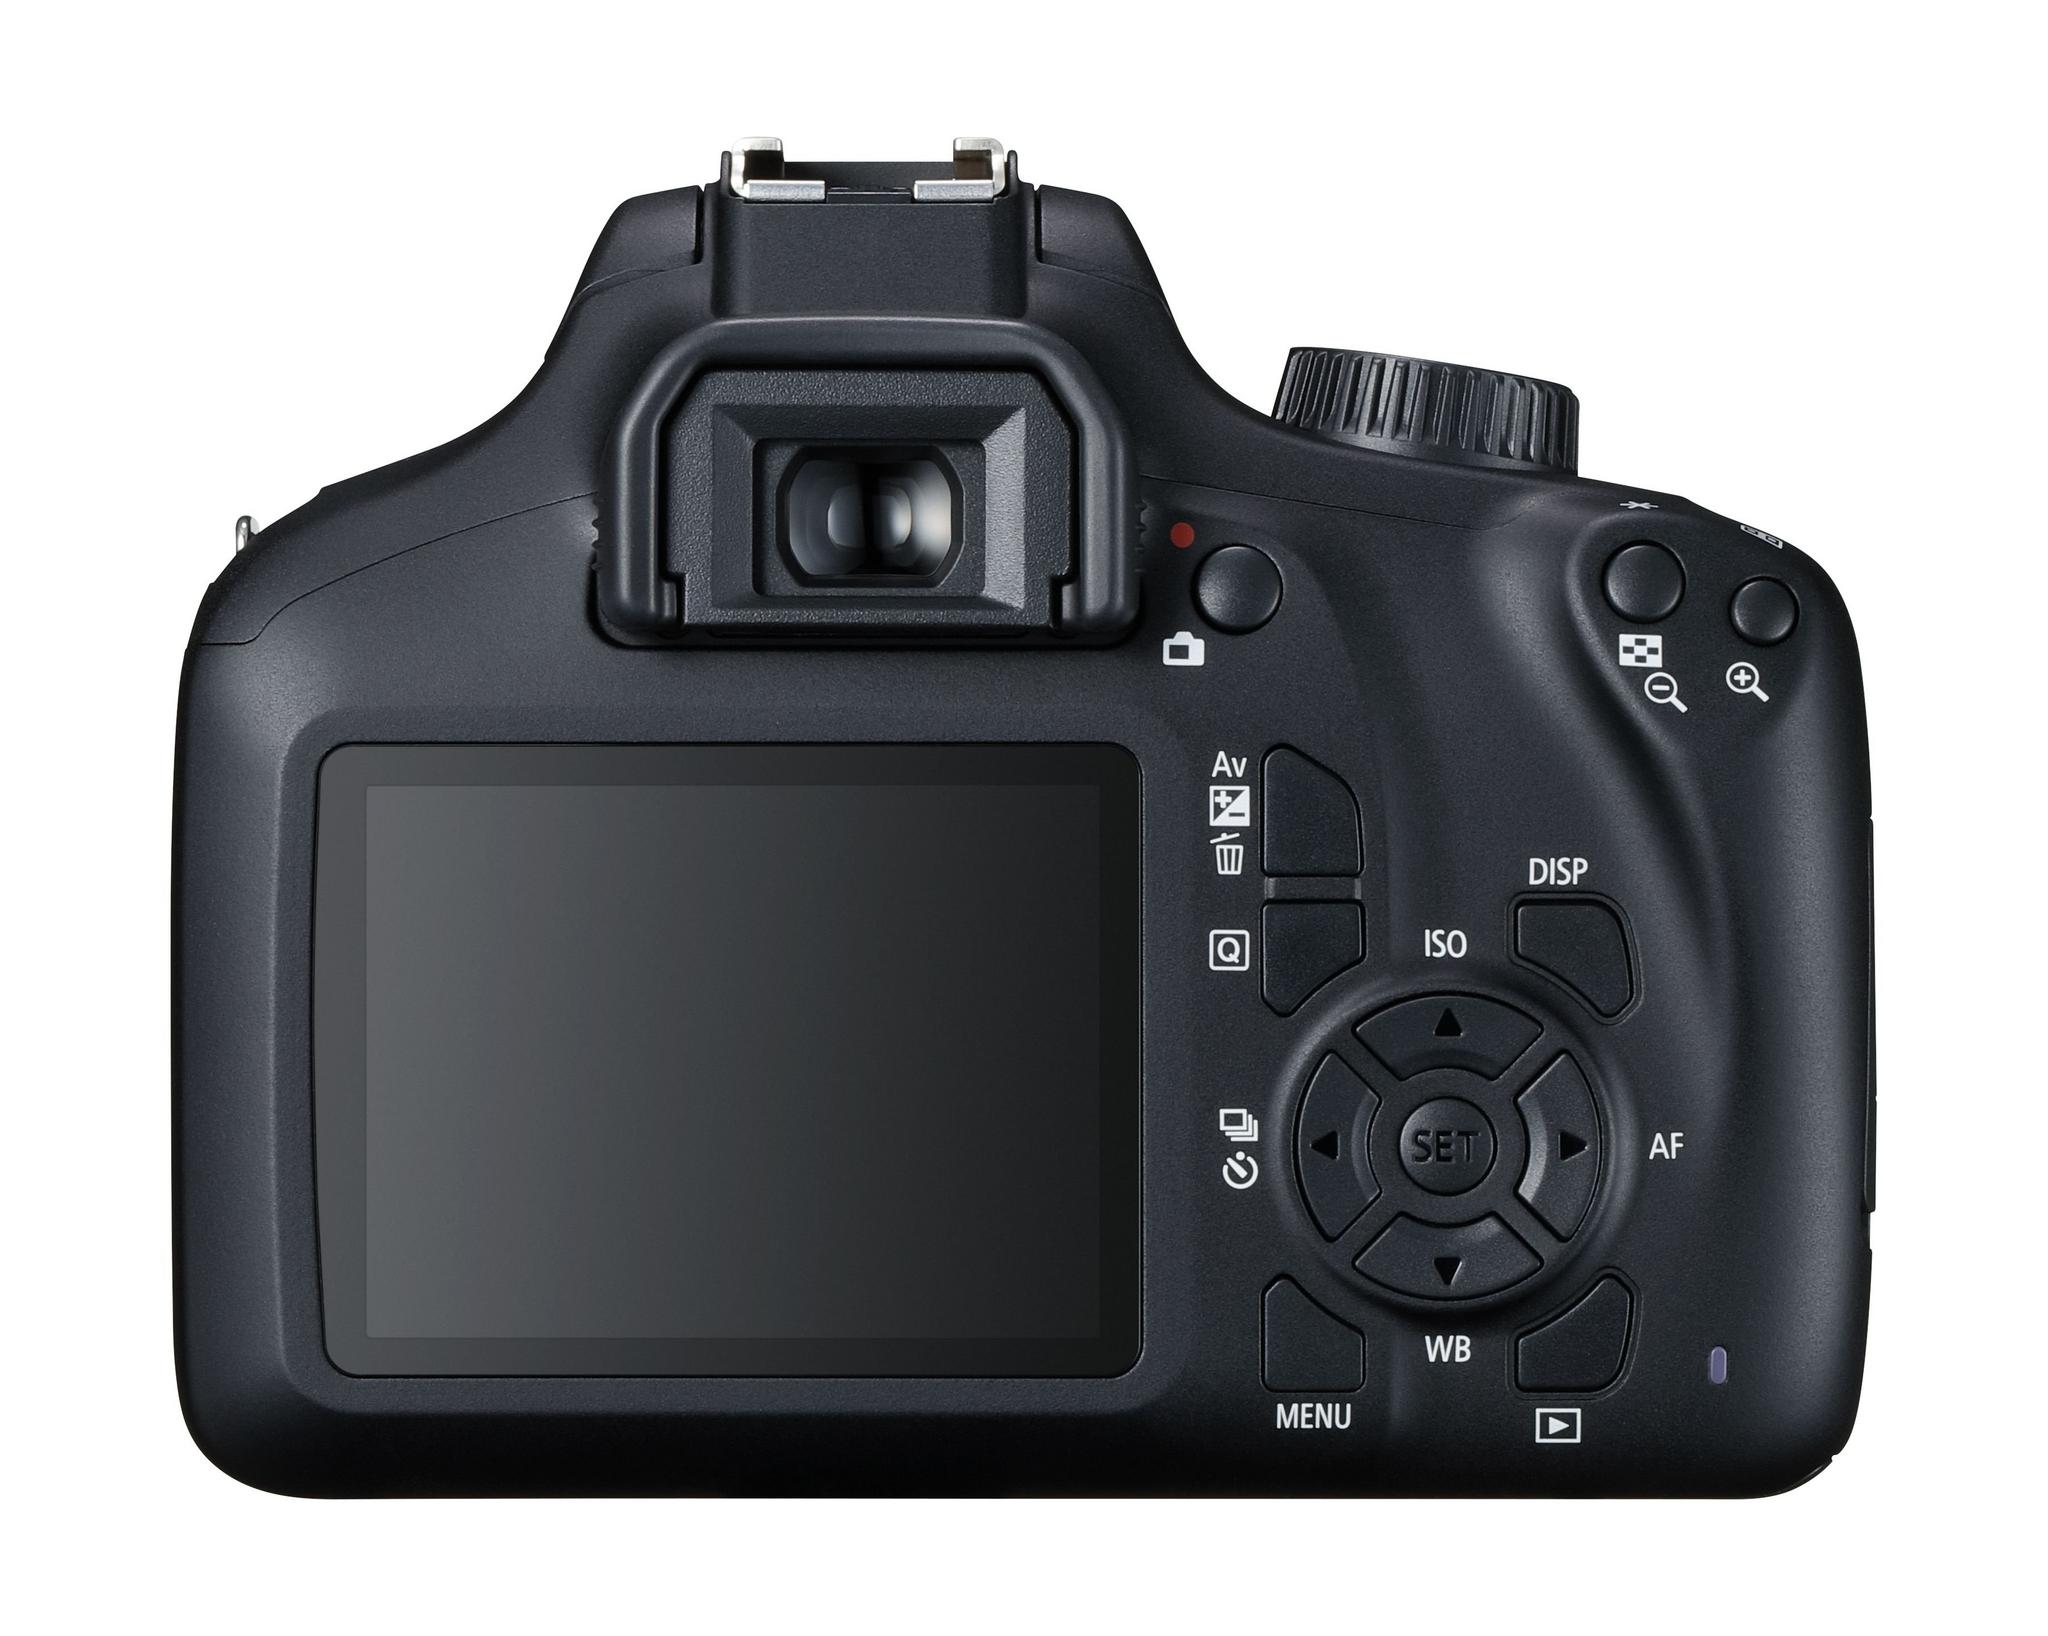 Canon EOS 4000D DSLR Camera + 18-55mm Lens